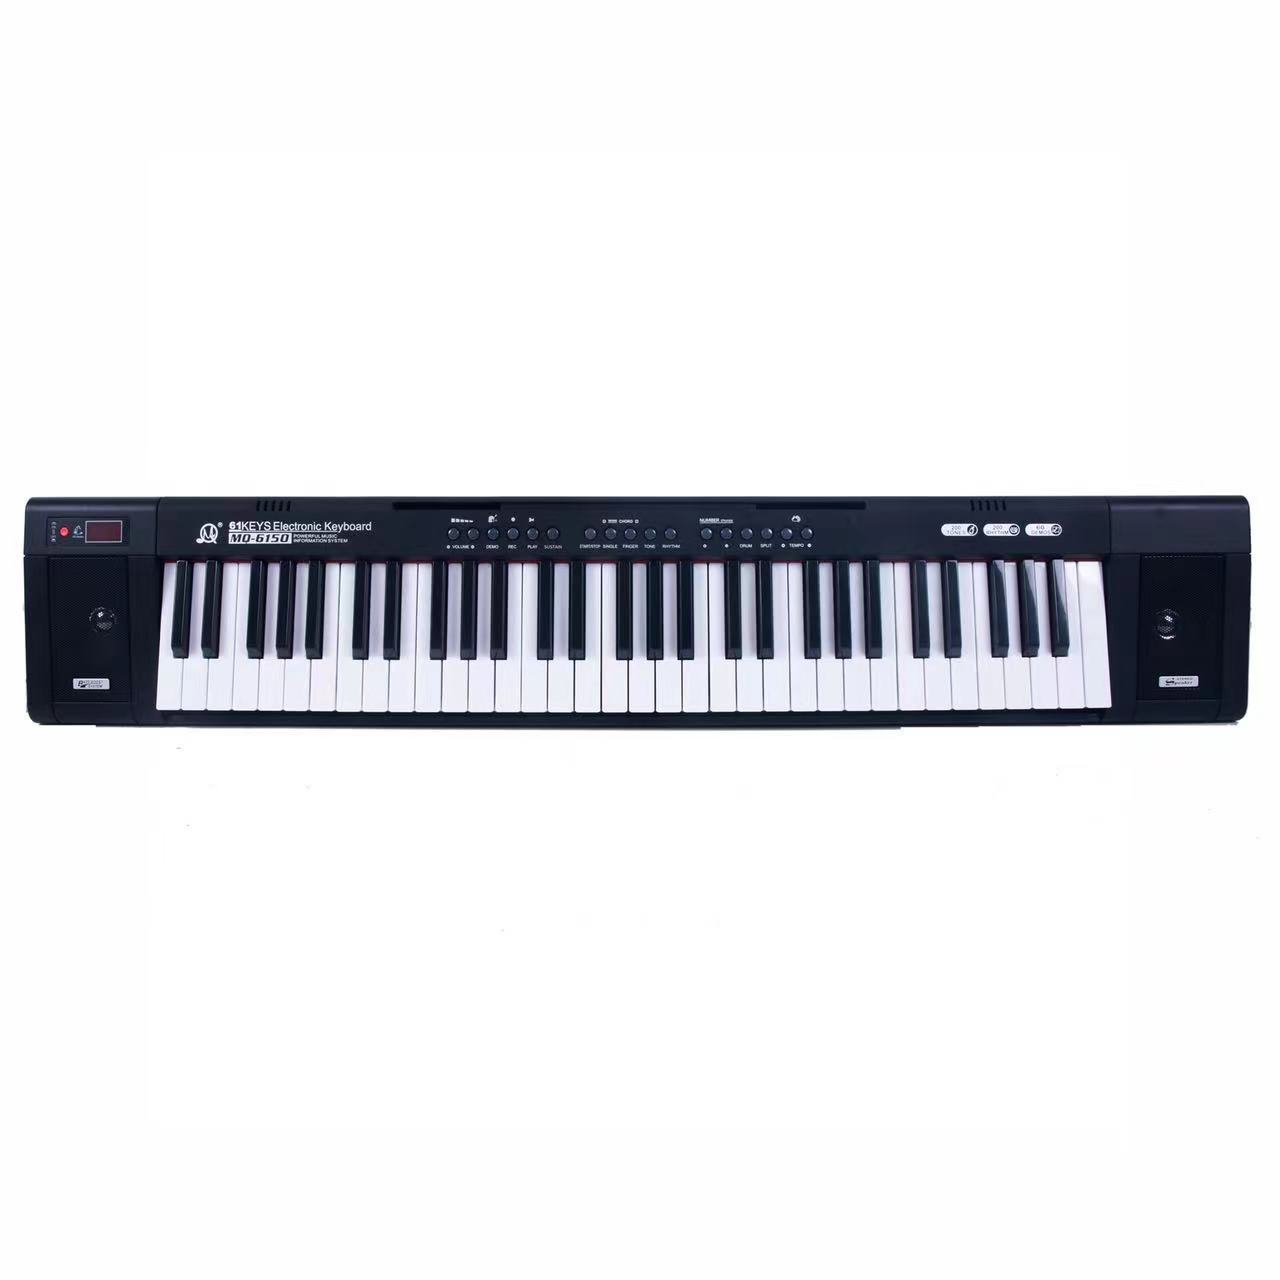 Junxia 61 Key Children's Electronic Keyboard Cross-Border Hot Sale Piano Preschool Education Music Equipment Gift Gift for Beginners